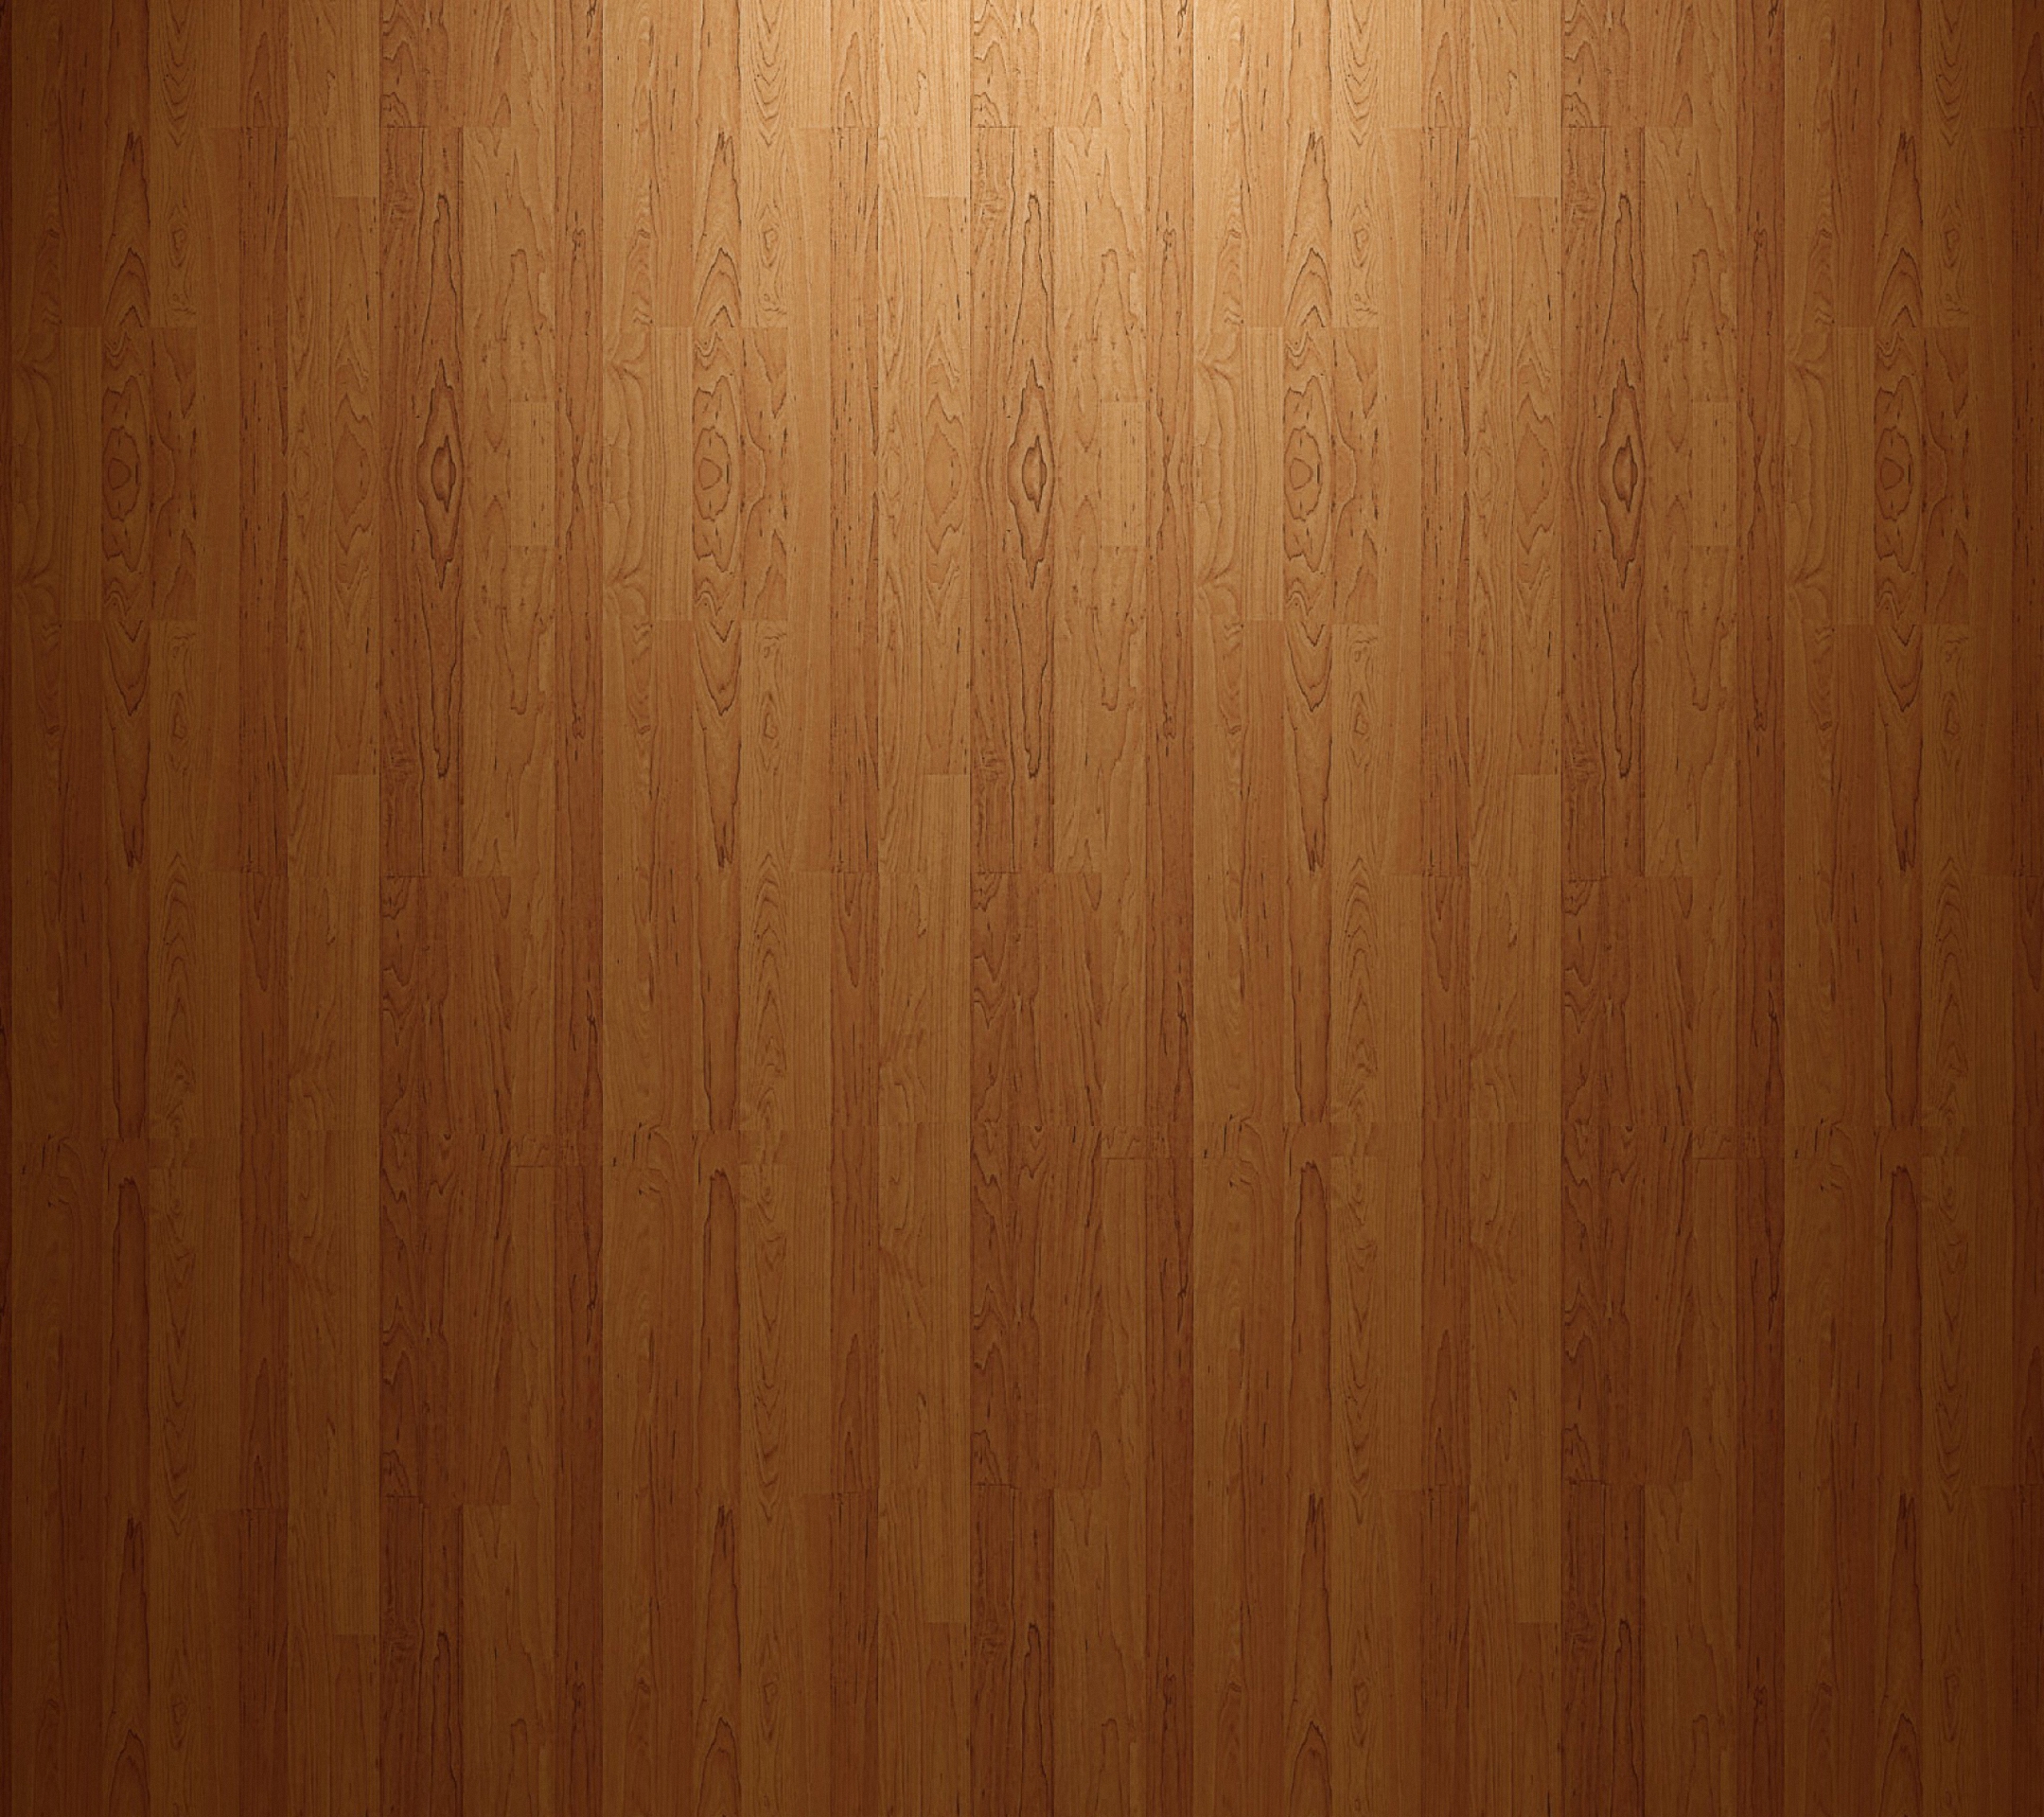 Wood Panel lg g flex 2 Wallpapers HD 2160x1920